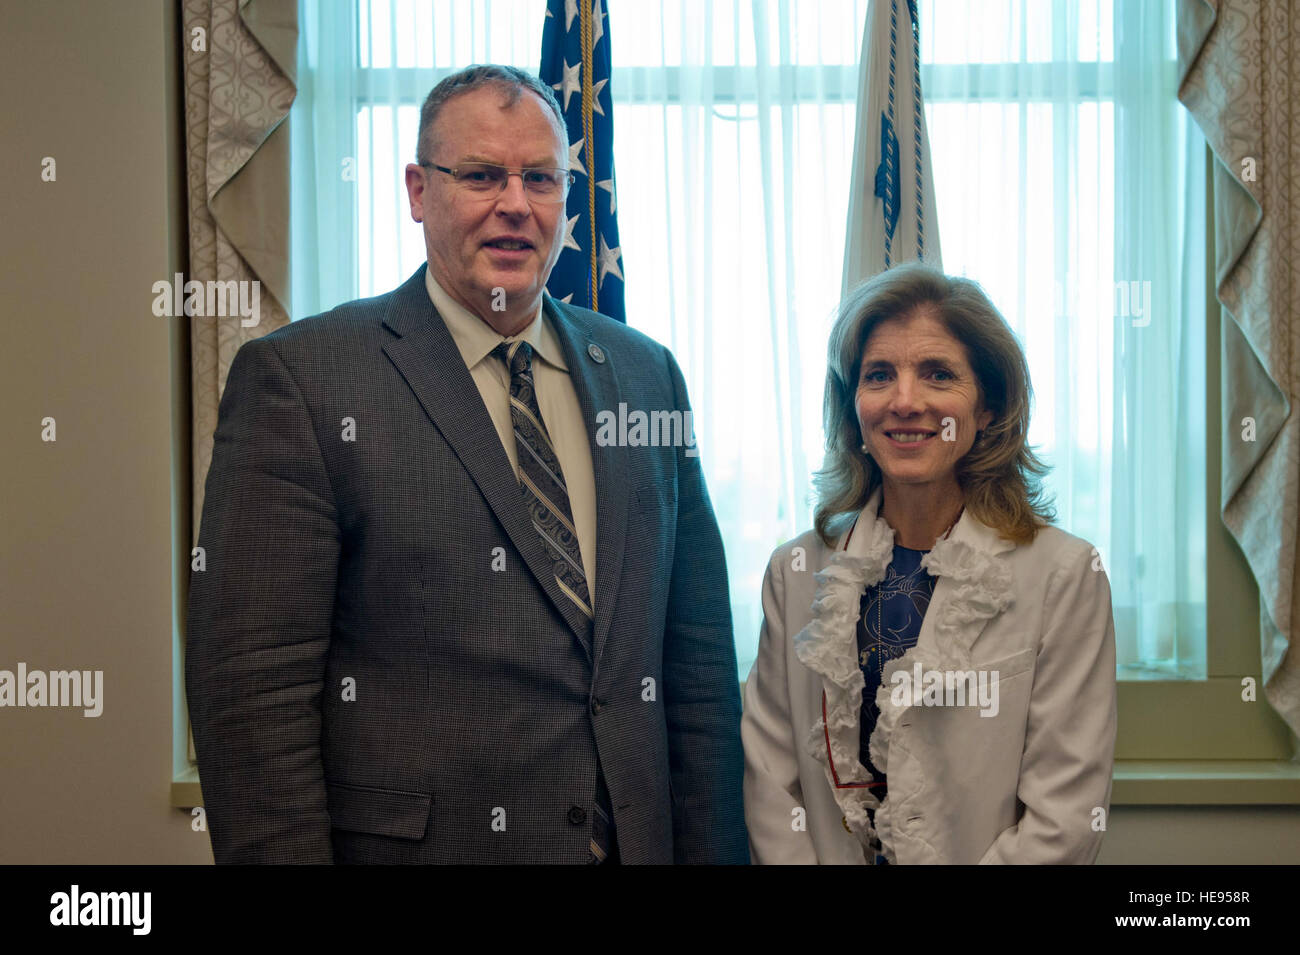 Deputy Secretary of Defense Bob Work meets with Caroline Kennedy the U.S. Ambassador to Japan at the Pentagon in Washington D.C., Jul. 23, 2014.  Master Sgt. Adrian Cadiz)(Released) Stock Photo